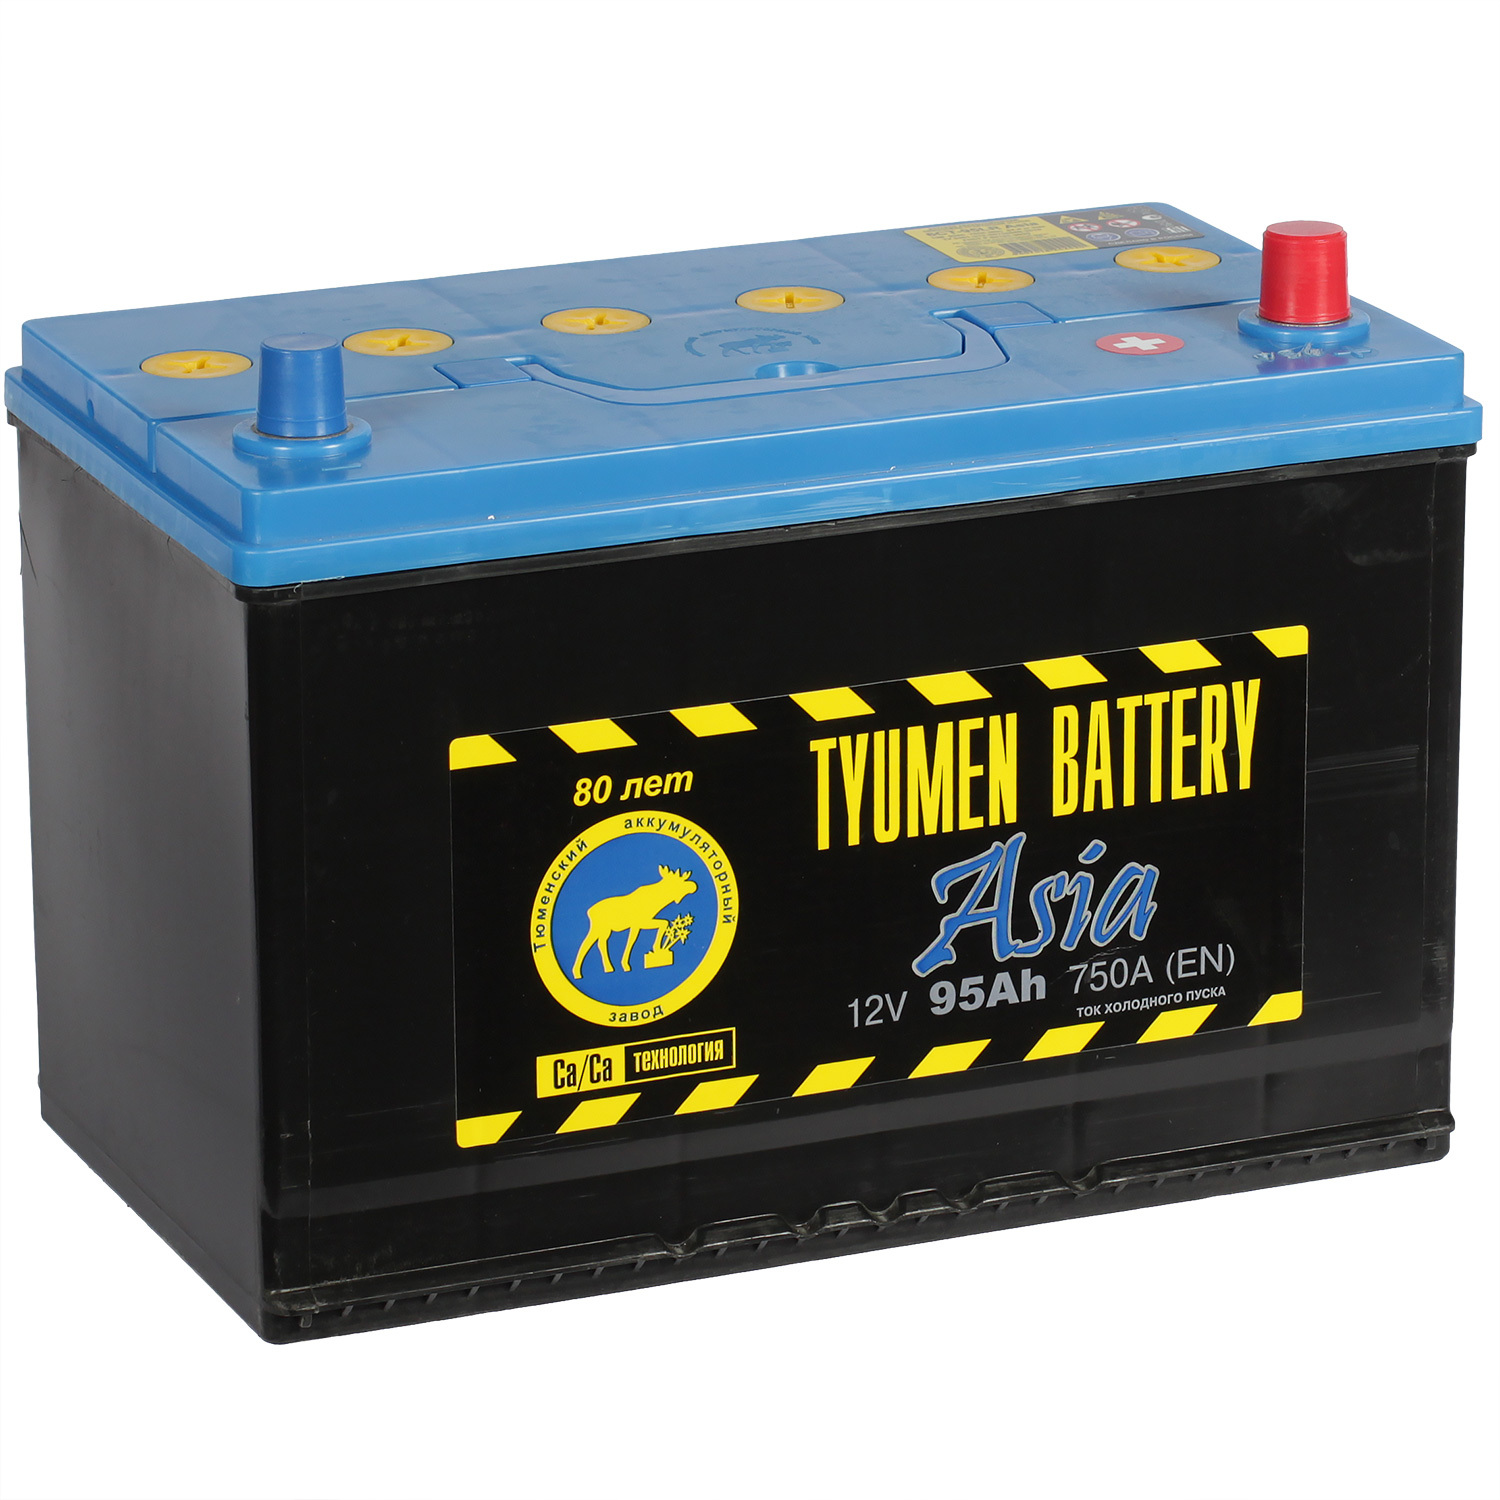 Tyumen Battery Автомобильный аккумулятор Tyumen Battery 95 Ач обратная полярность D31L tyumen batbear автомобильный аккумулятор tyumen batbear 55 ач обратная полярность l1